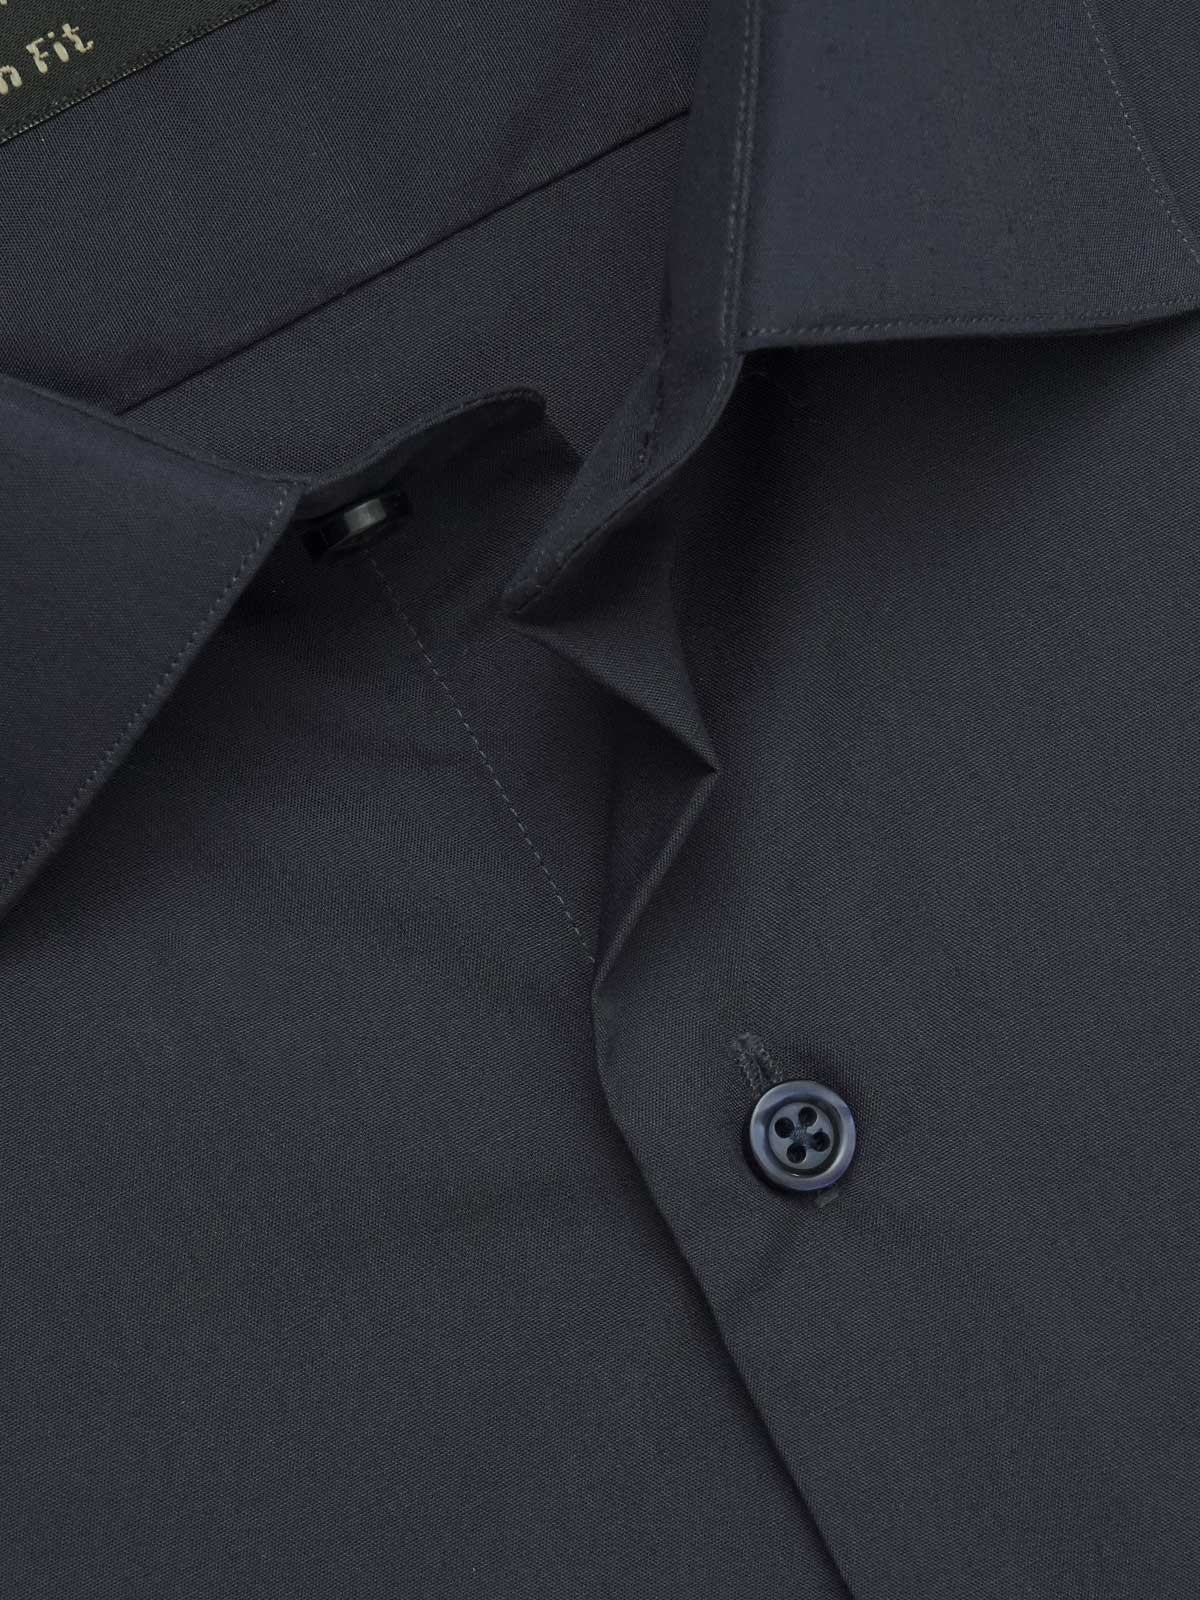 Navy Blue Plain, Elite Edition, French Collar Men’s Formal Shirt (FS-484)